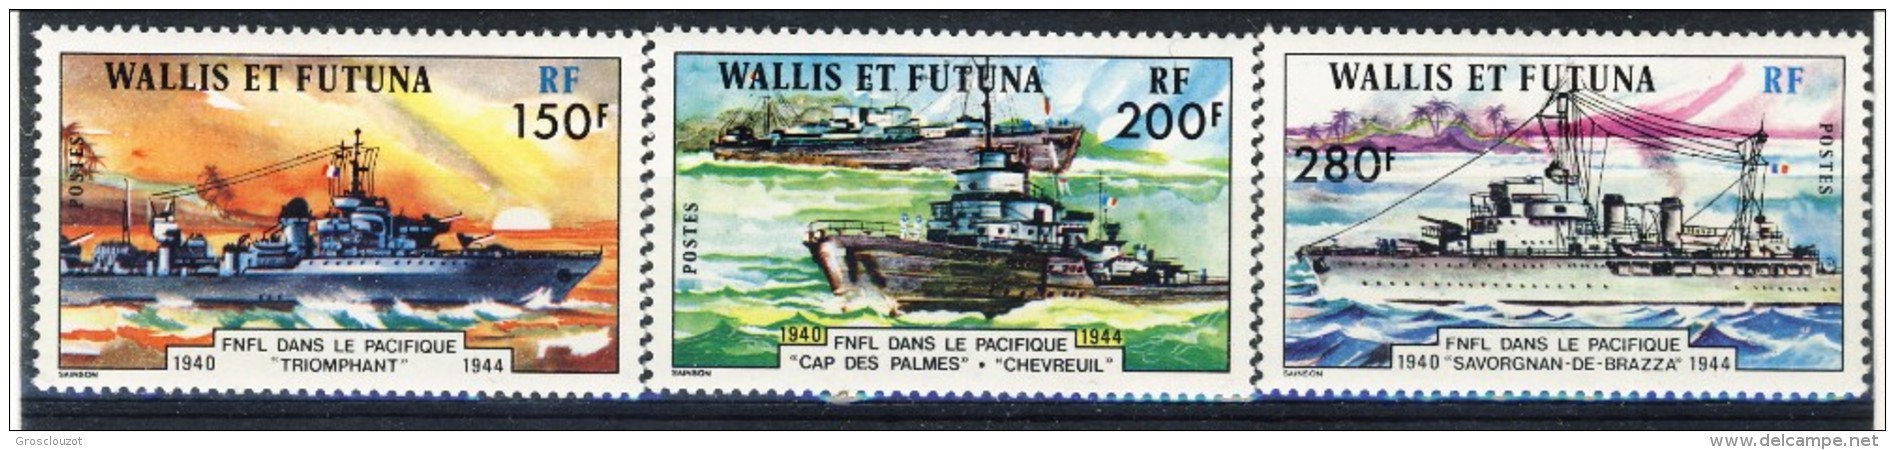 Wallis Et Futuna 1978 Serie N. 210-212 Navi Da Guerra Francesi  MNH Catalogo € 51,50 - Unused Stamps